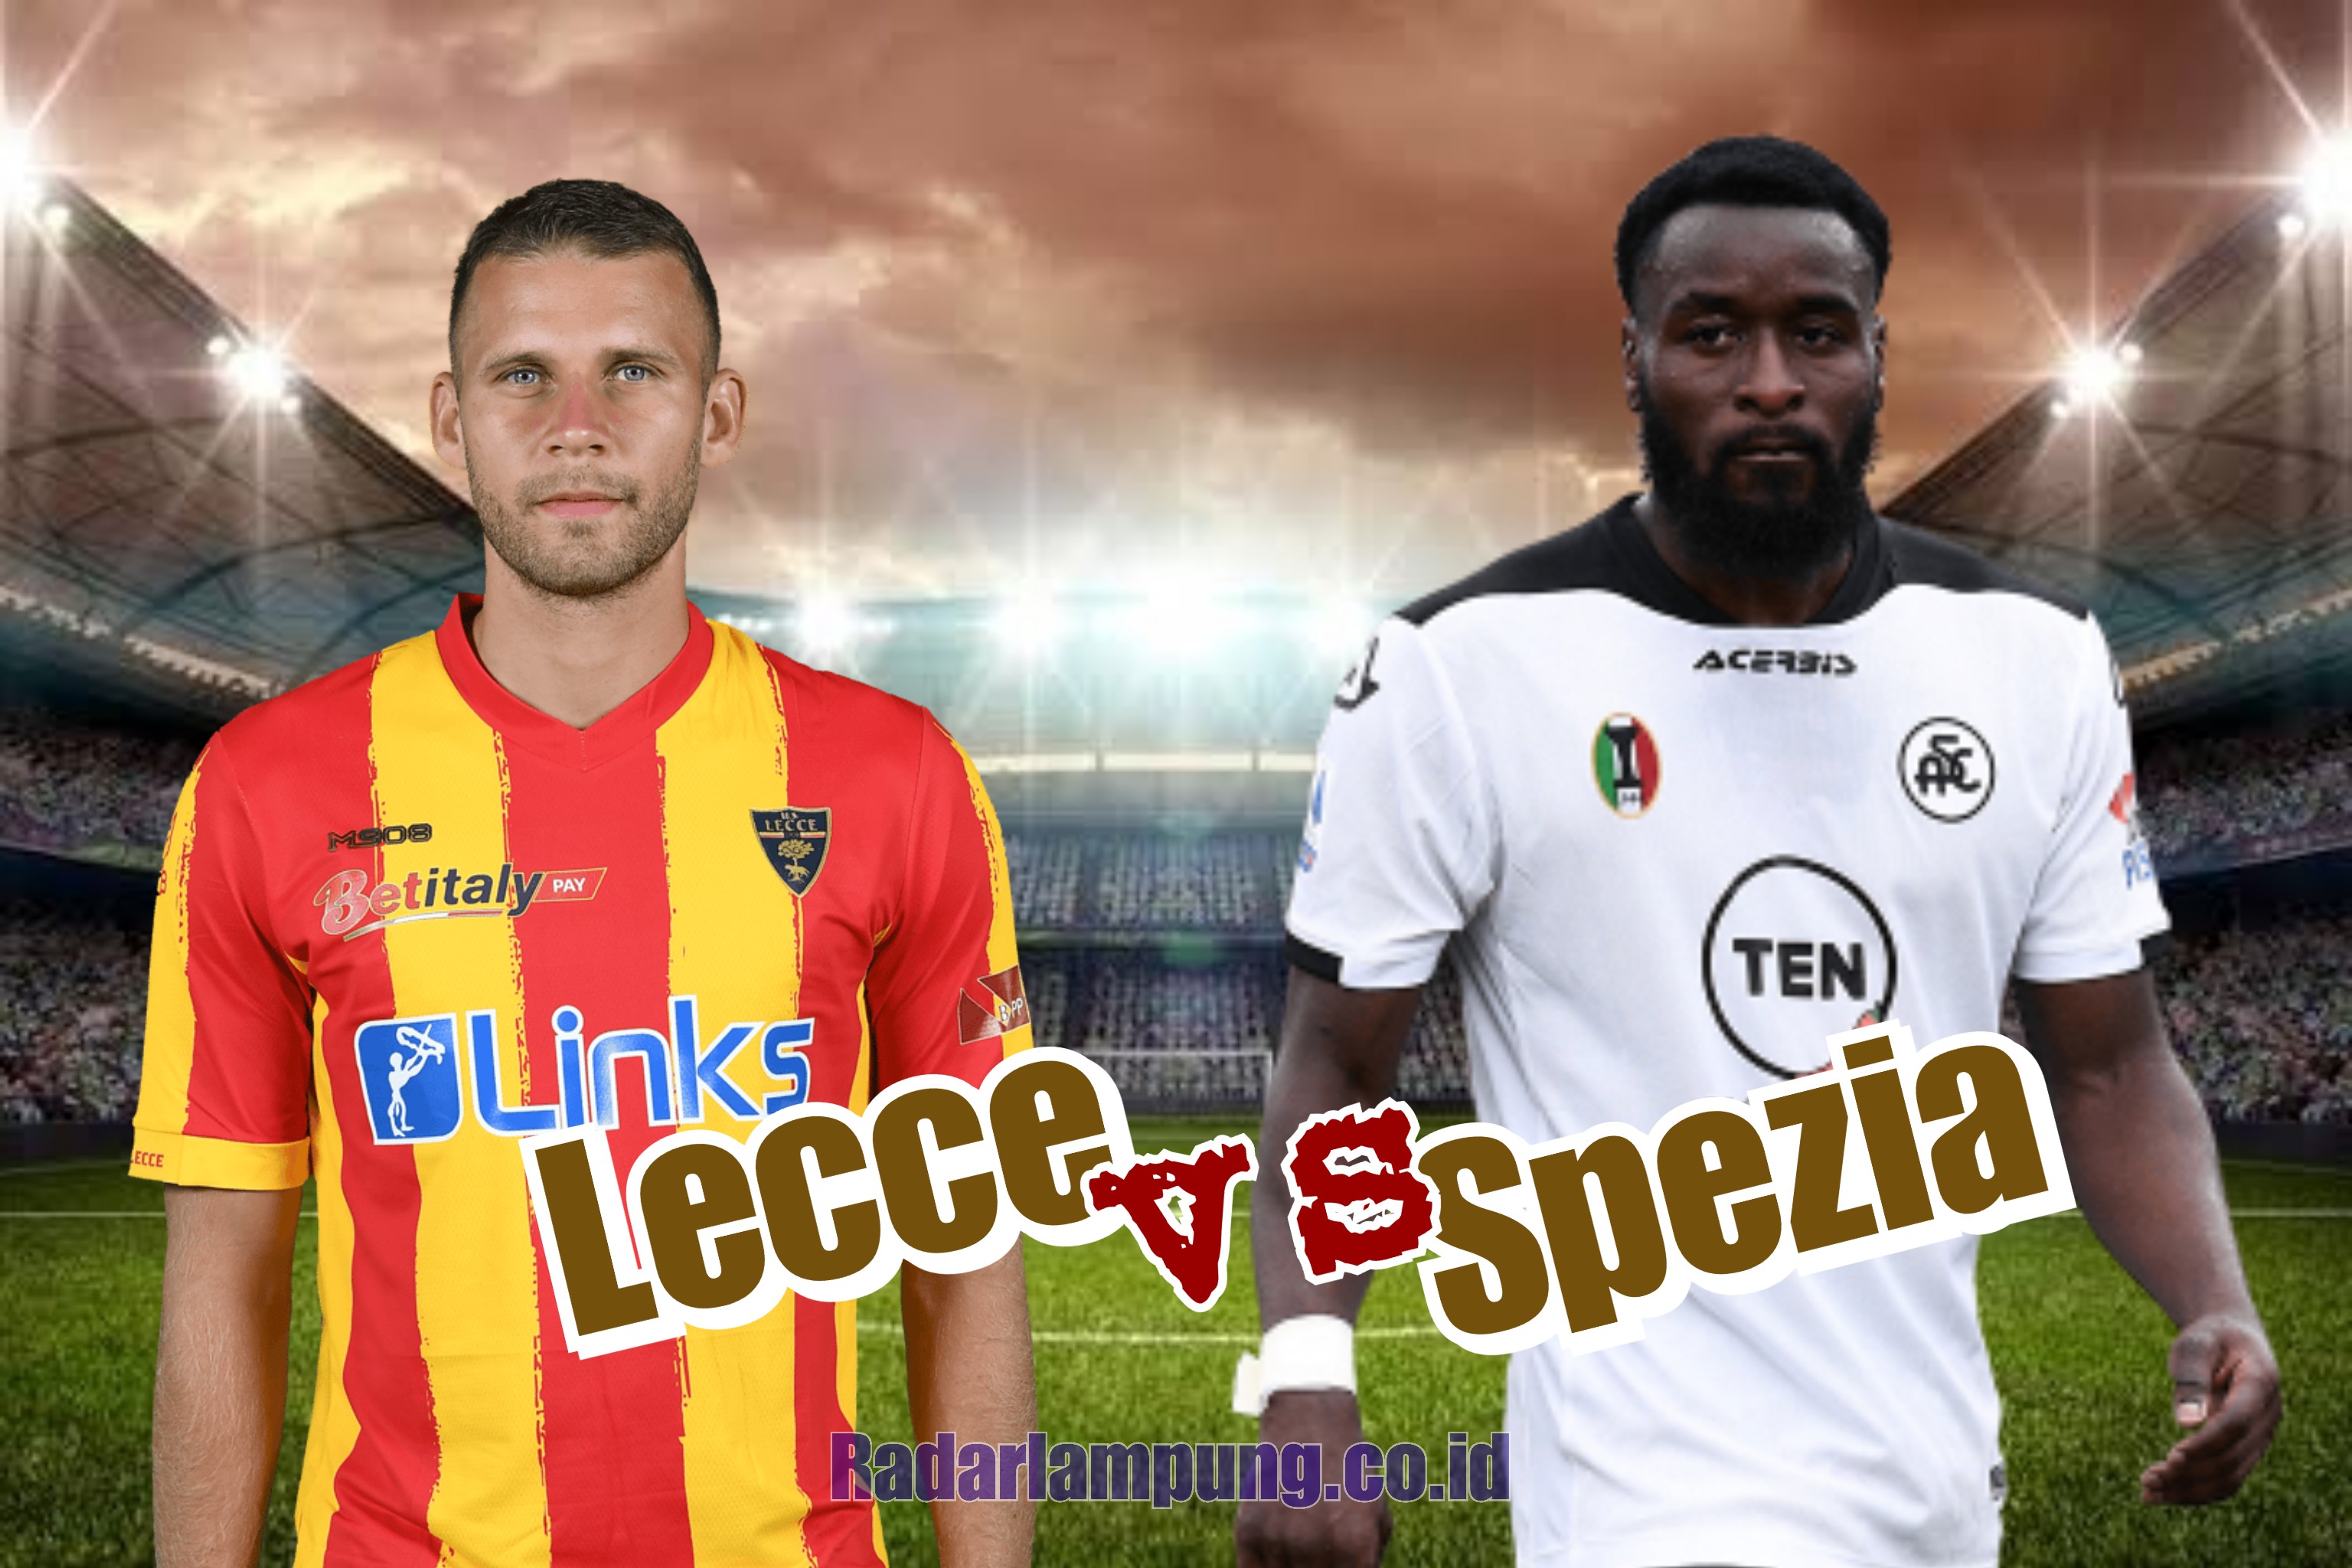 Prediksi Skor Lecce vs Spezia di Liga Italia: Preview Tim, Head to Head, dan Starting Line-up